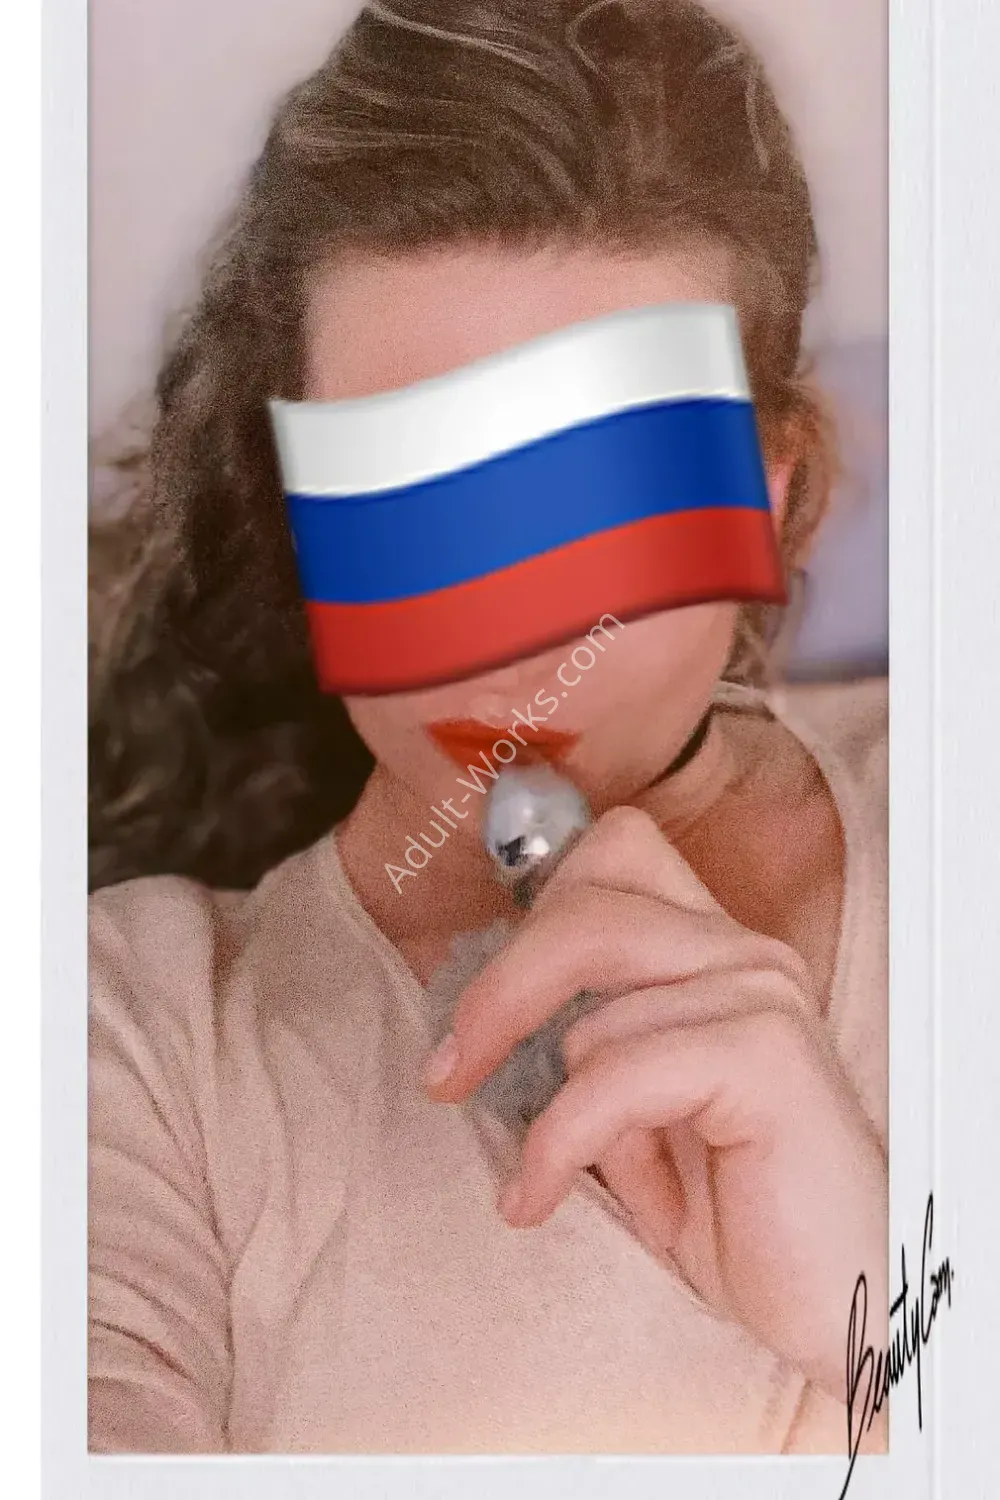 Russian Doll, Caucasian